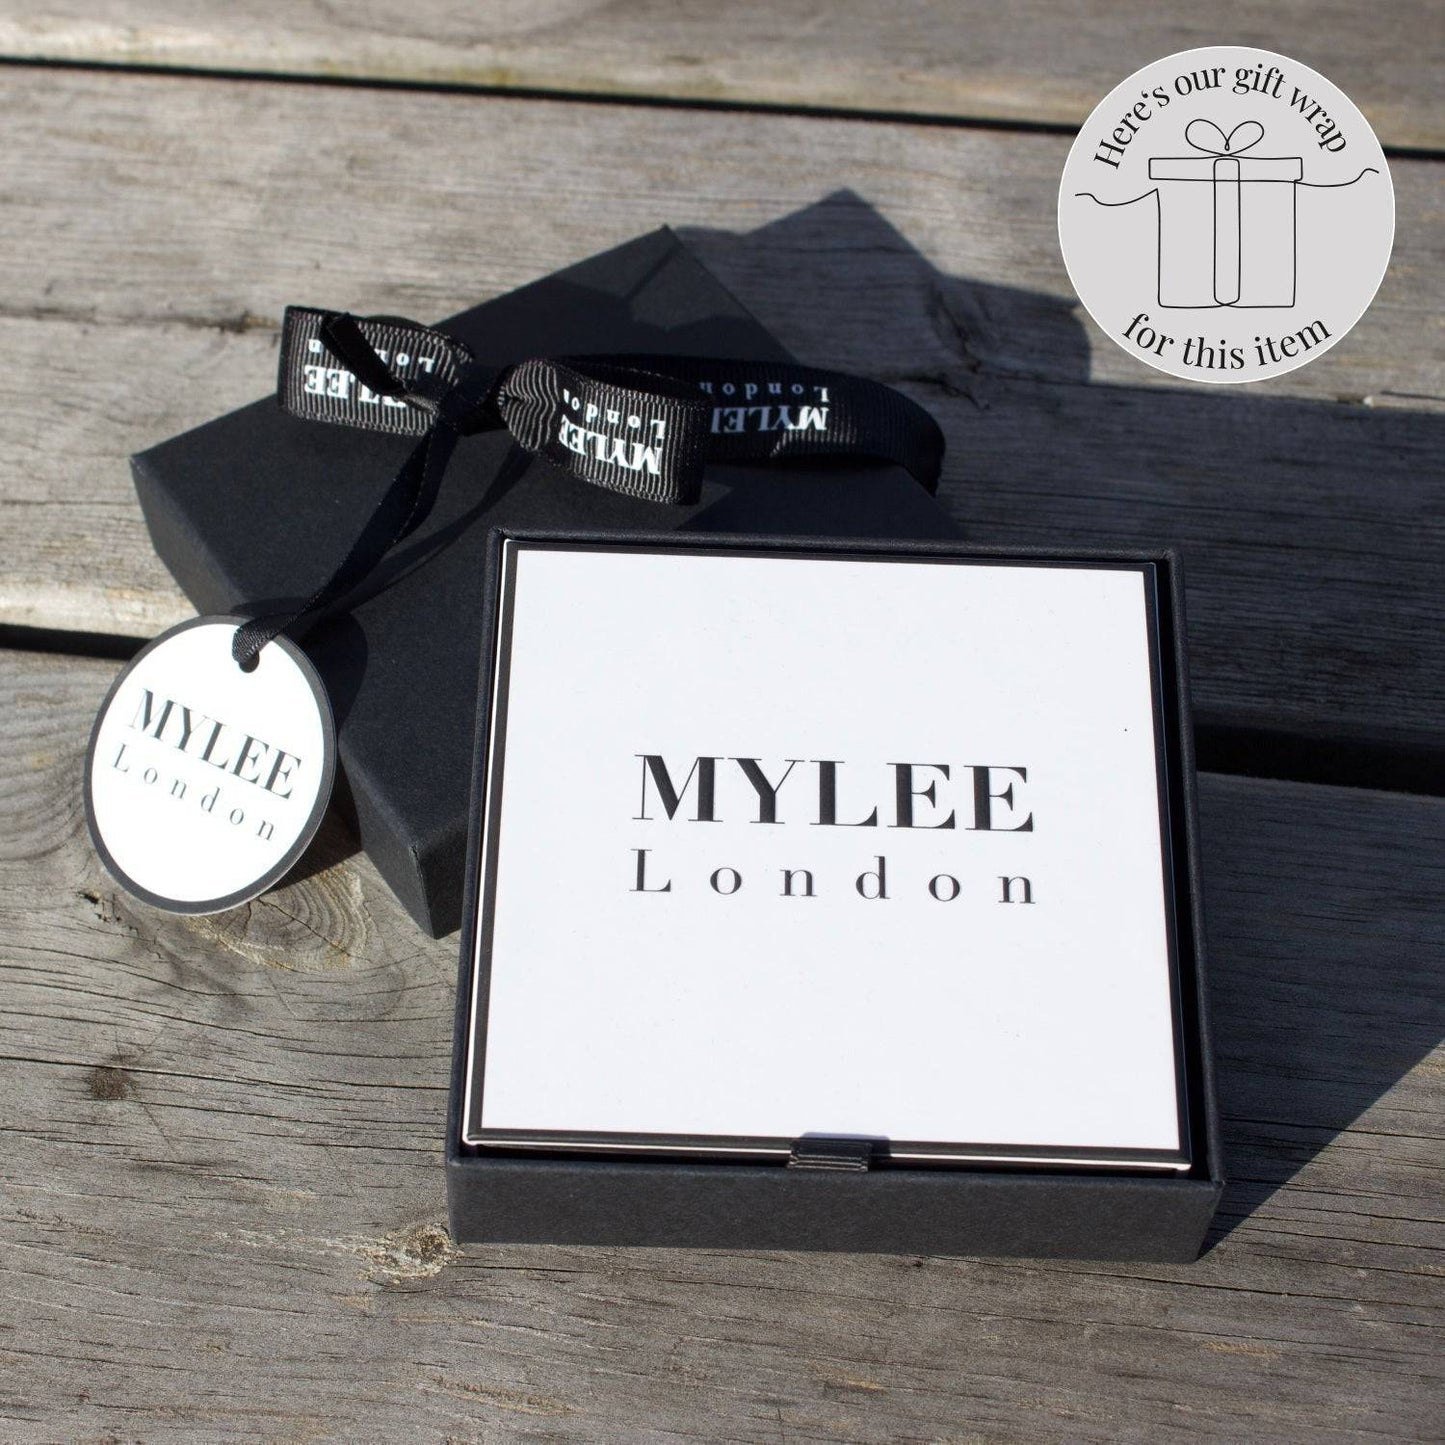 Owl on Silver Ball Bead Ring - MYLEE London